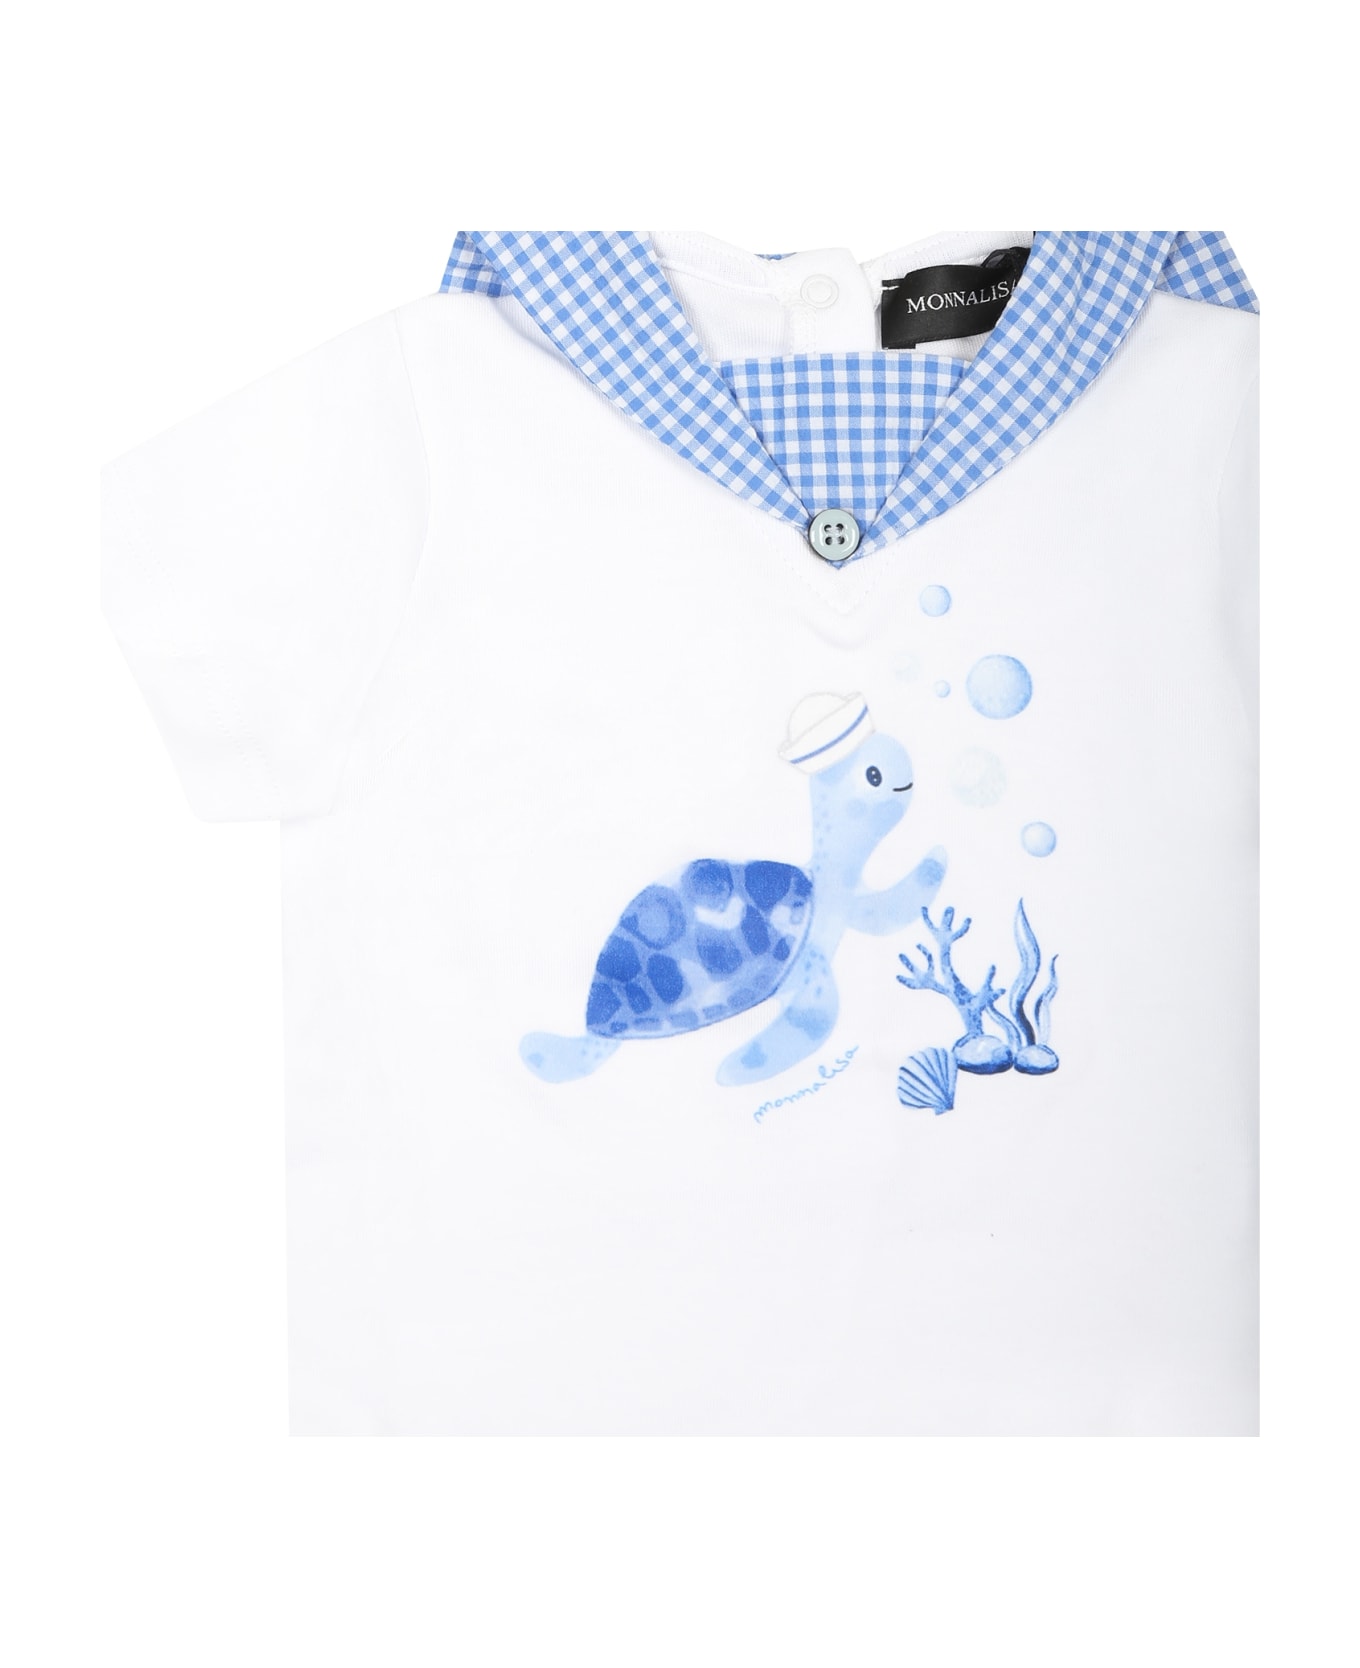 Monnalisa White Babygrow For Baby Boy With Turtle Print - White